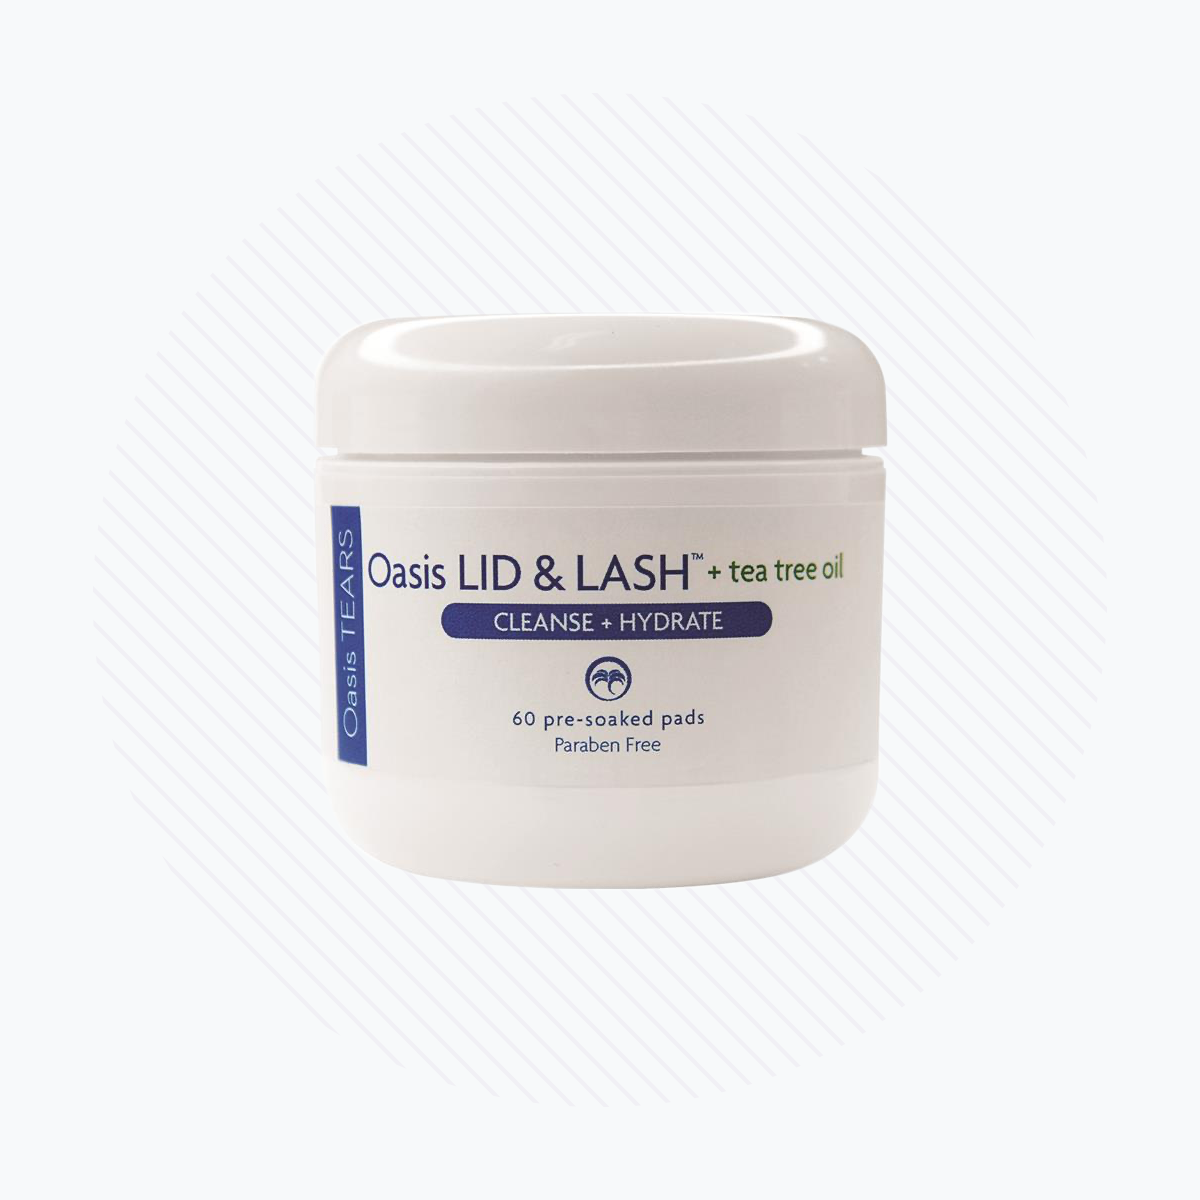 Oasis LID & LASH + Tea Tree Oil Eyelid & Lash Cleansing Wipes (60ct)